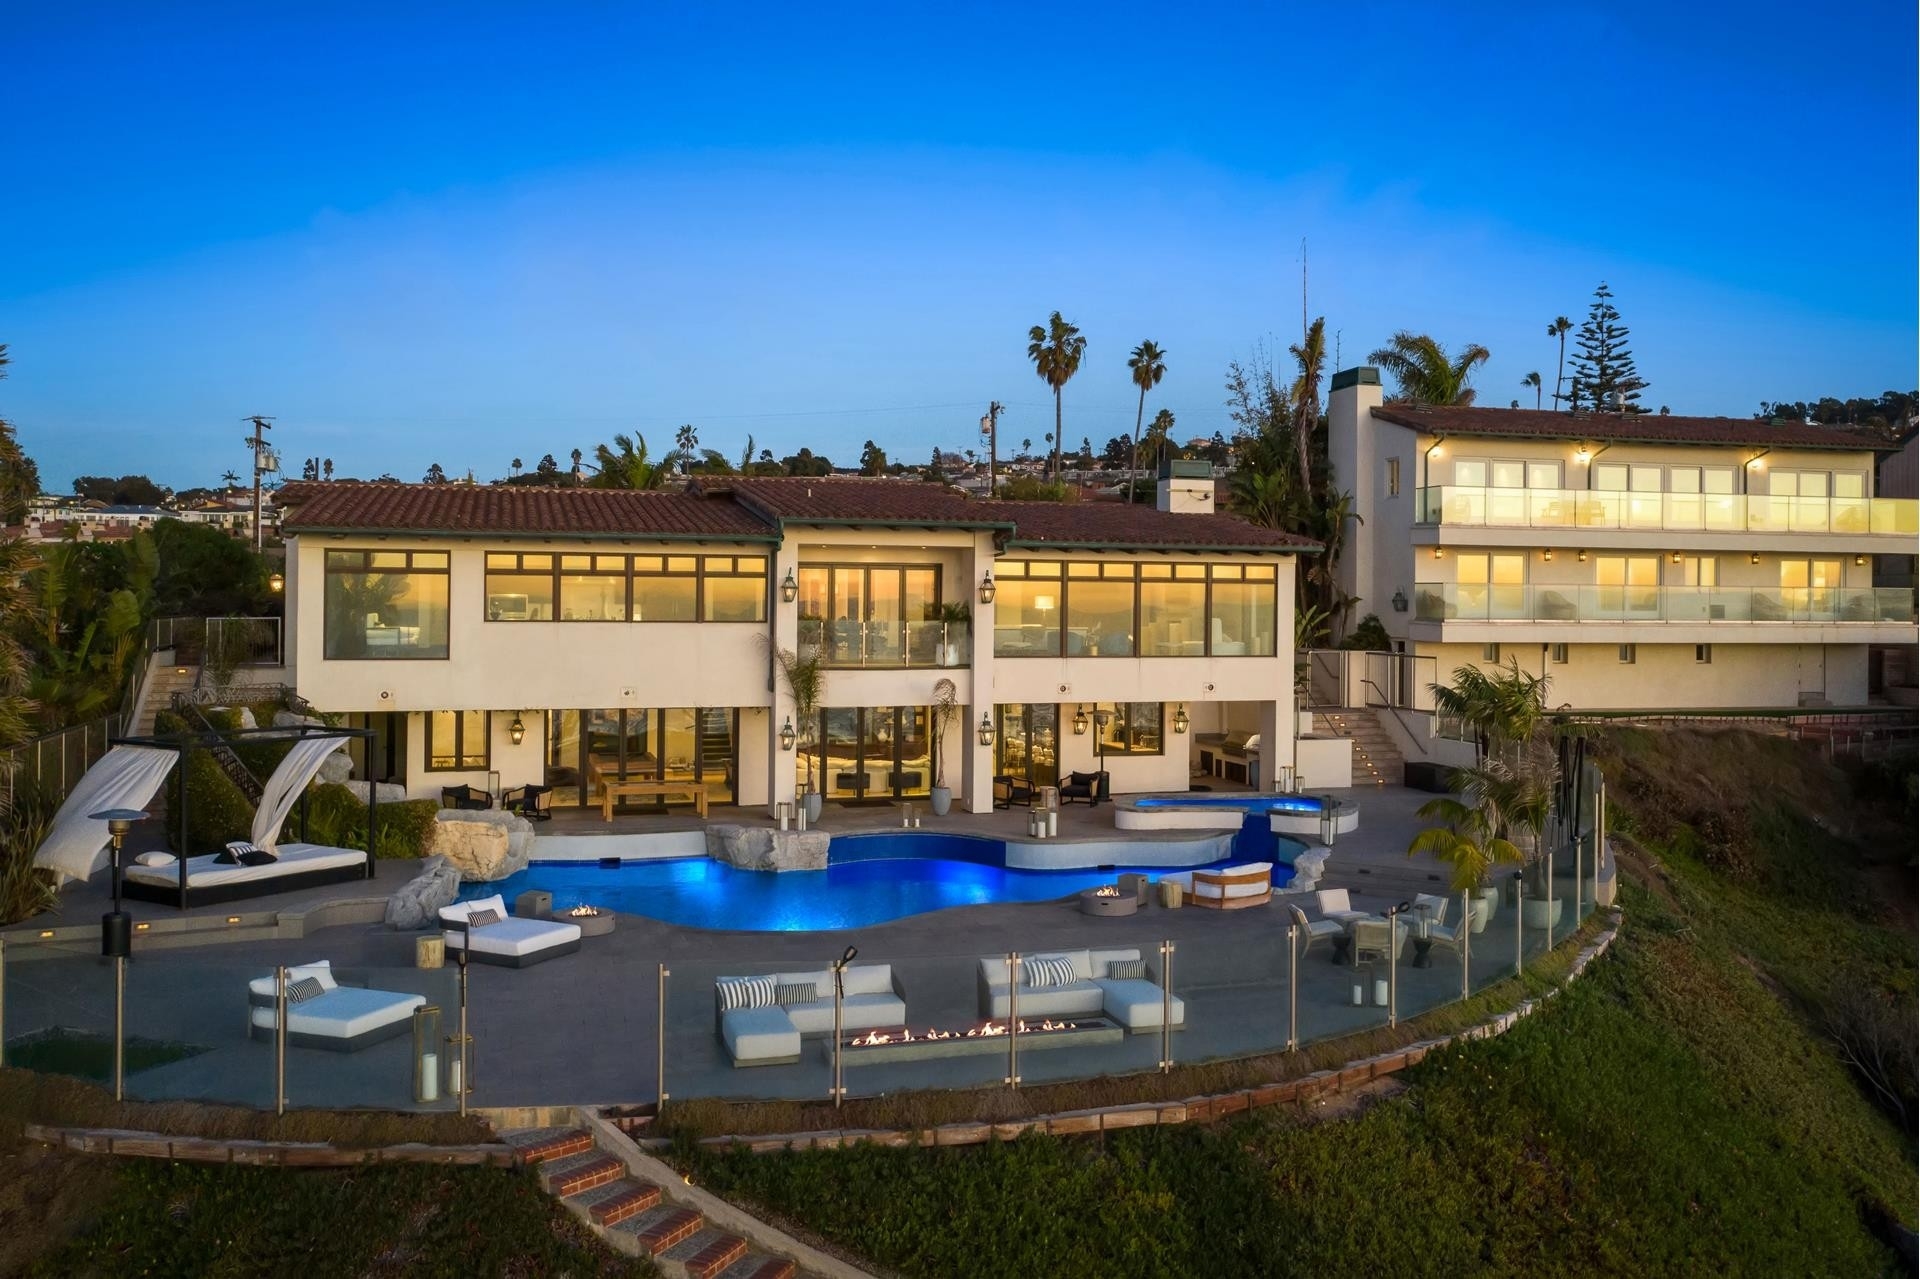 Single Family Home for Sale at Redondo Beach, California 90277